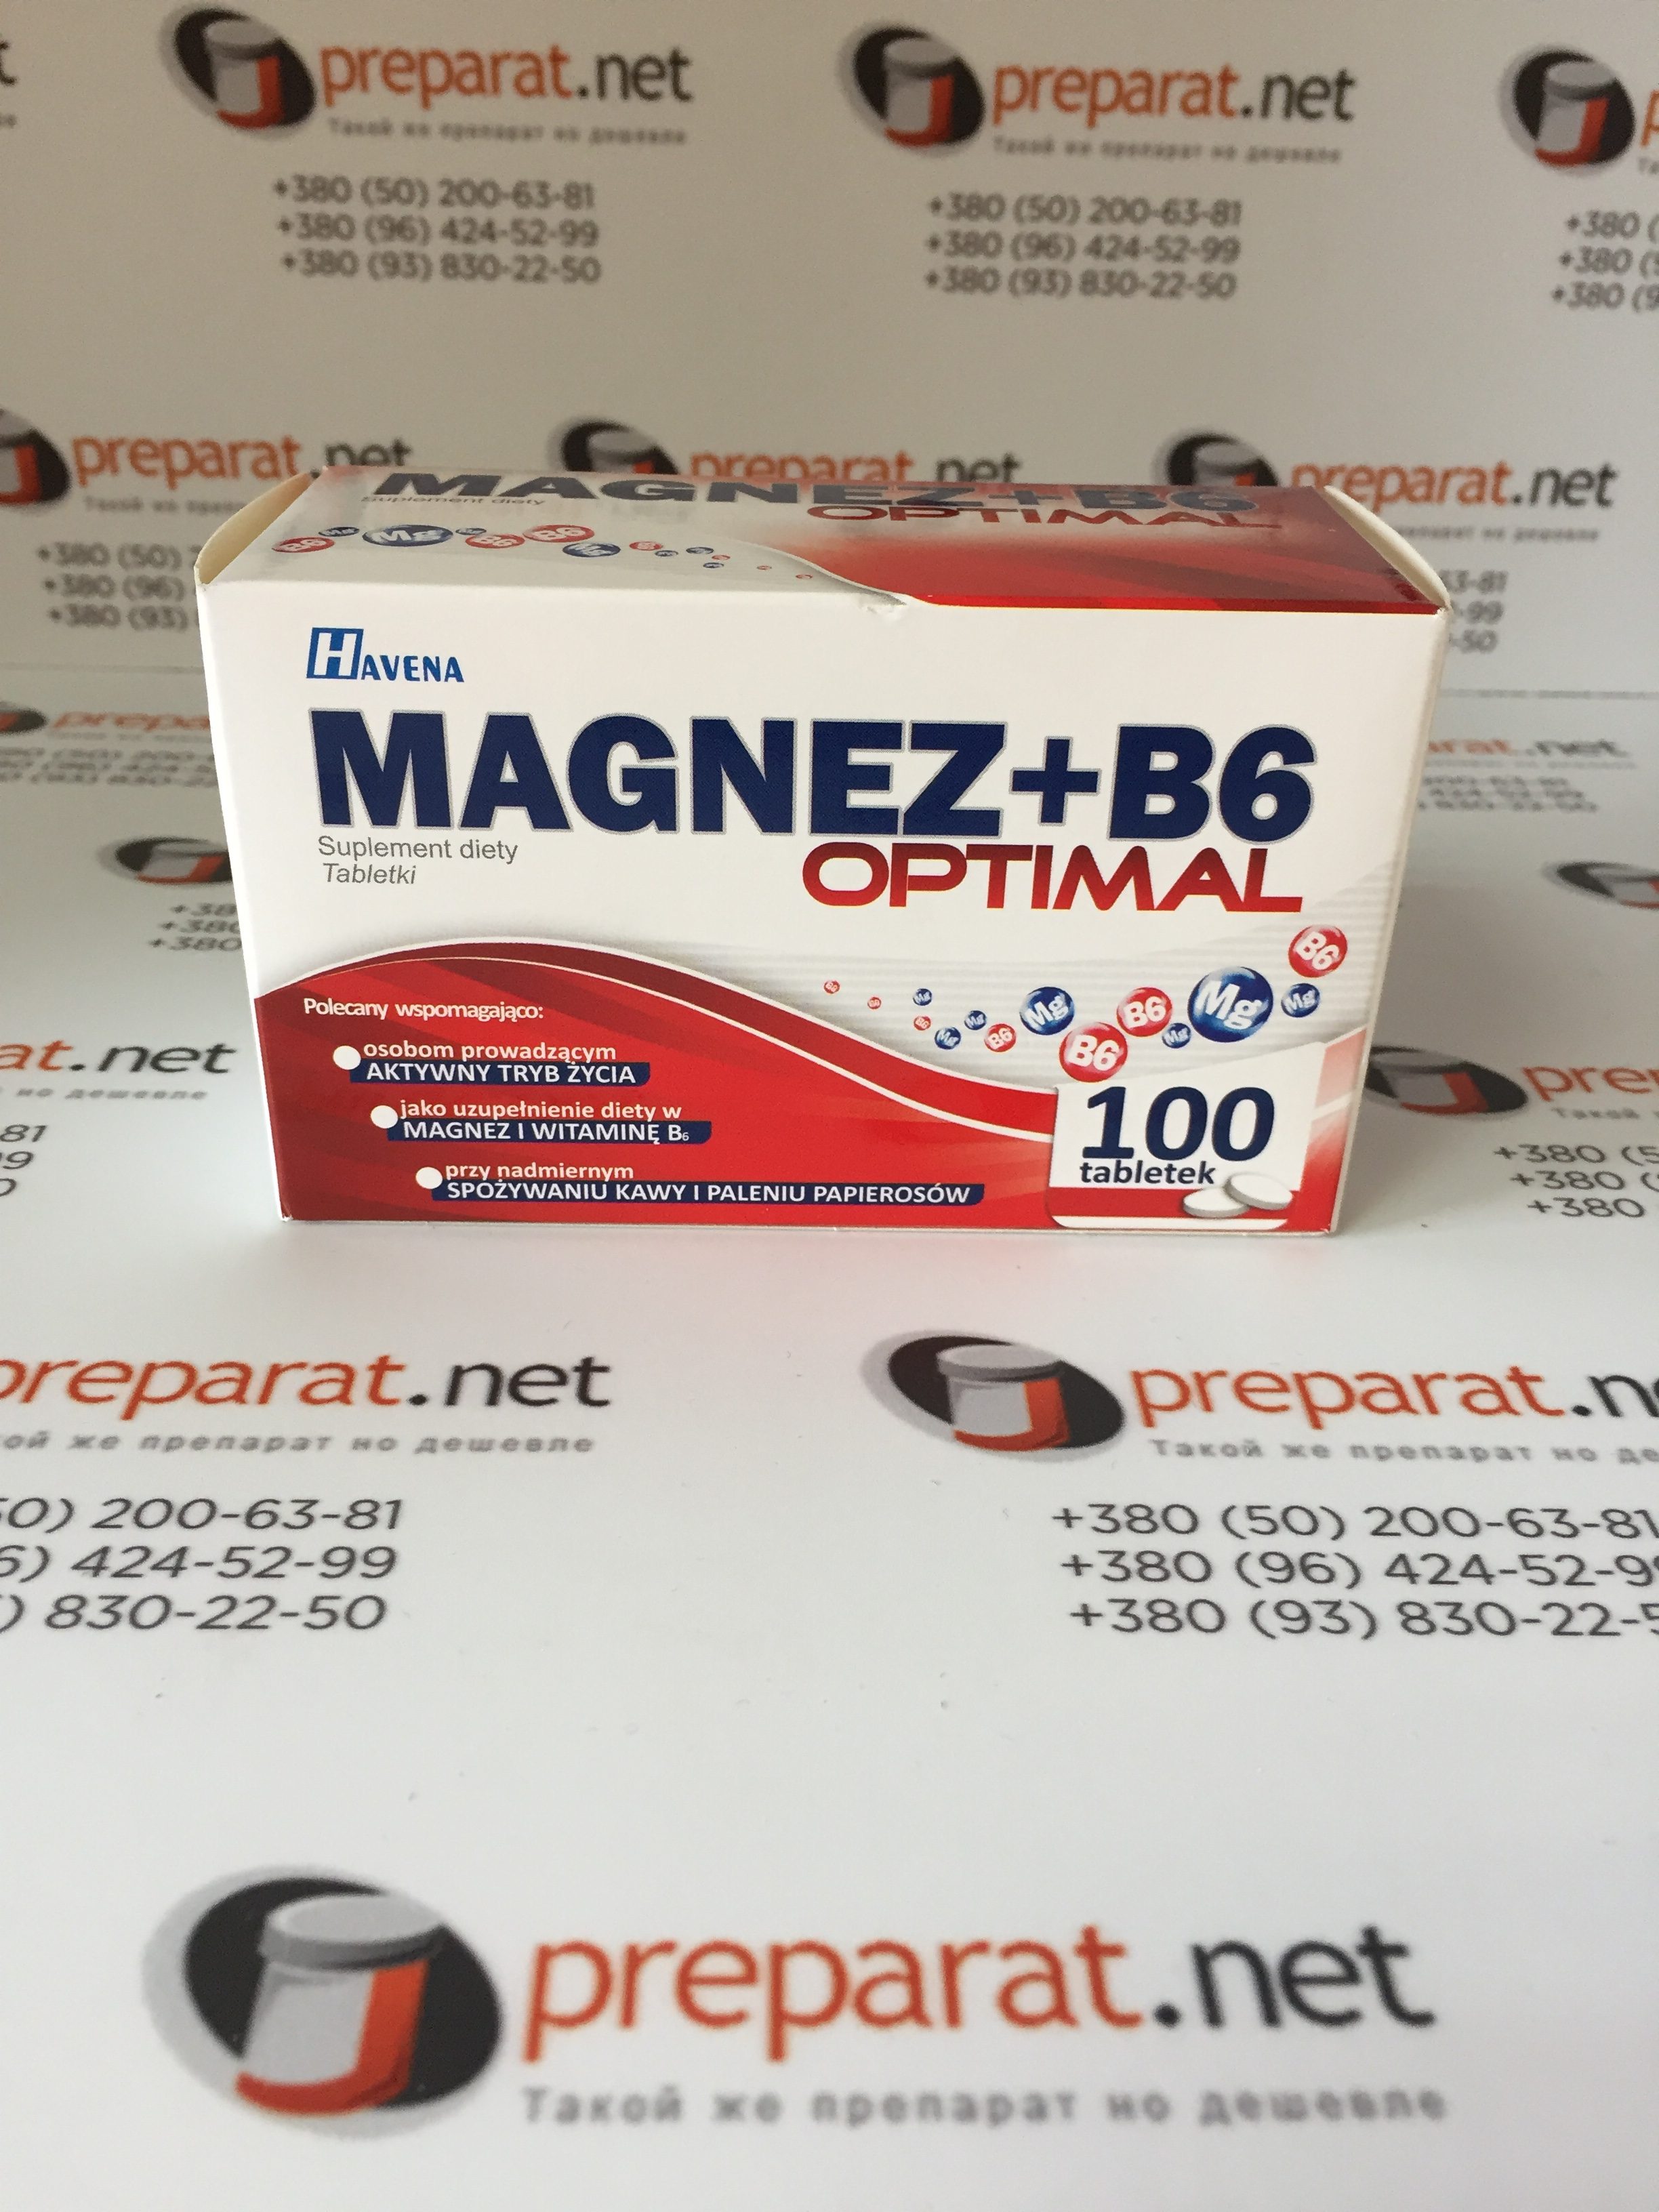 Магне + B6 Оптимальный, 100 таблеток — Preparat.net (Препарат.нет)